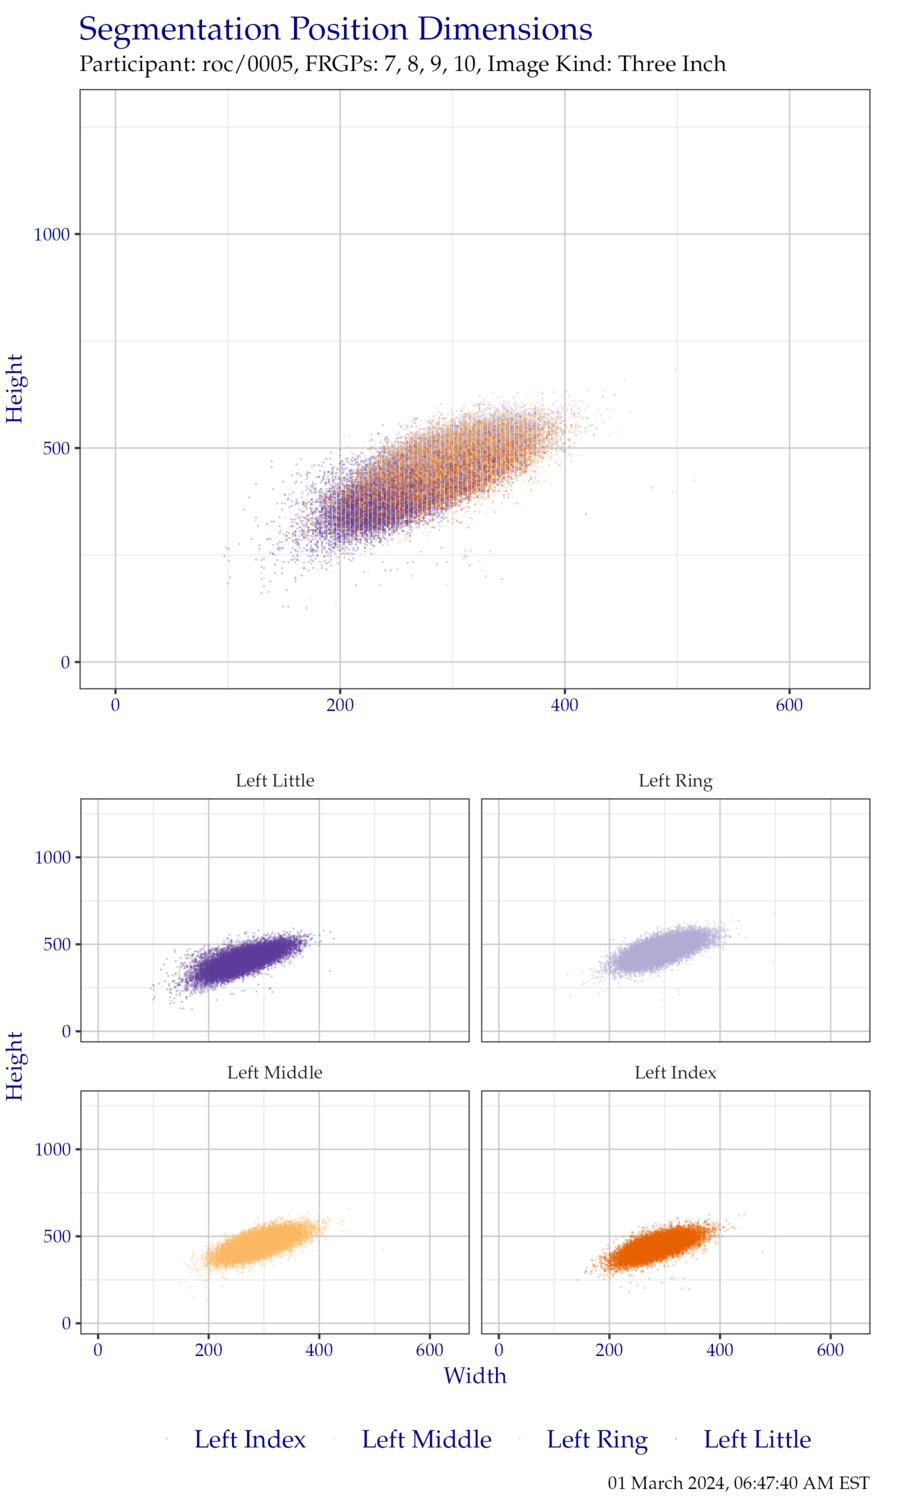 Segmentation position dimensions for left hand ThreeInch data.